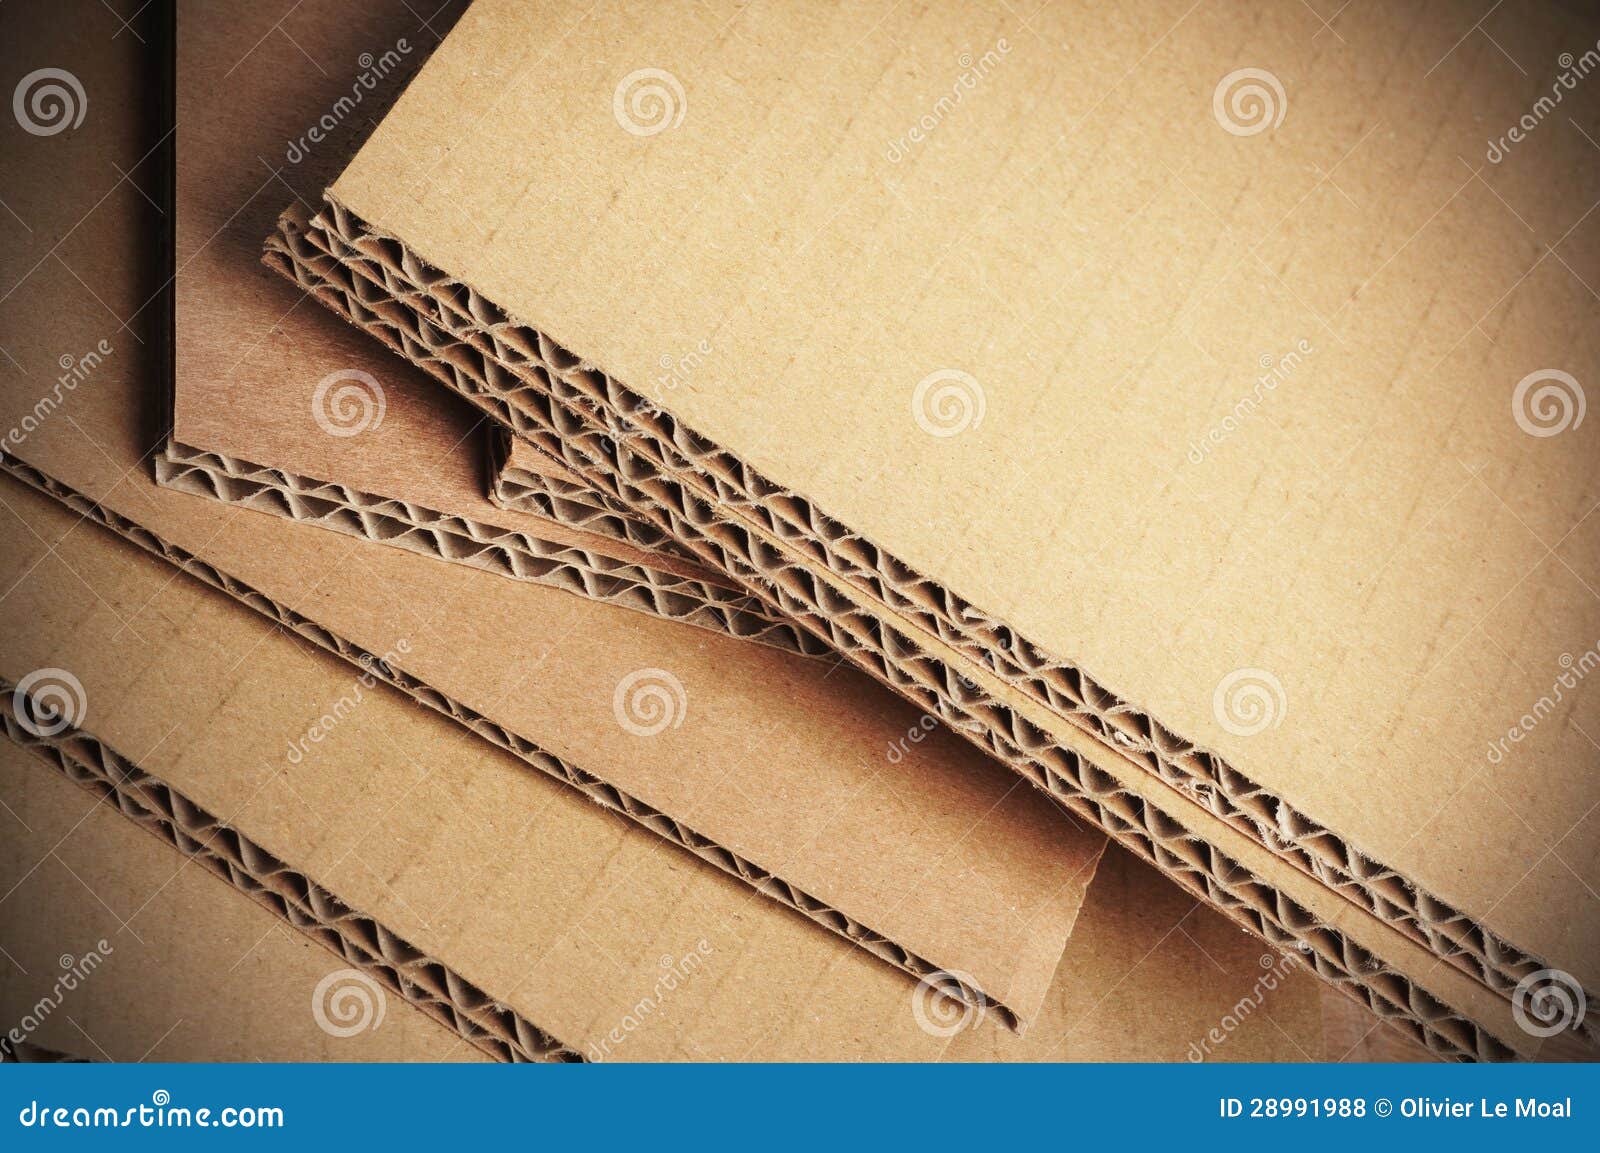 corrugated cardboard background, carton detail